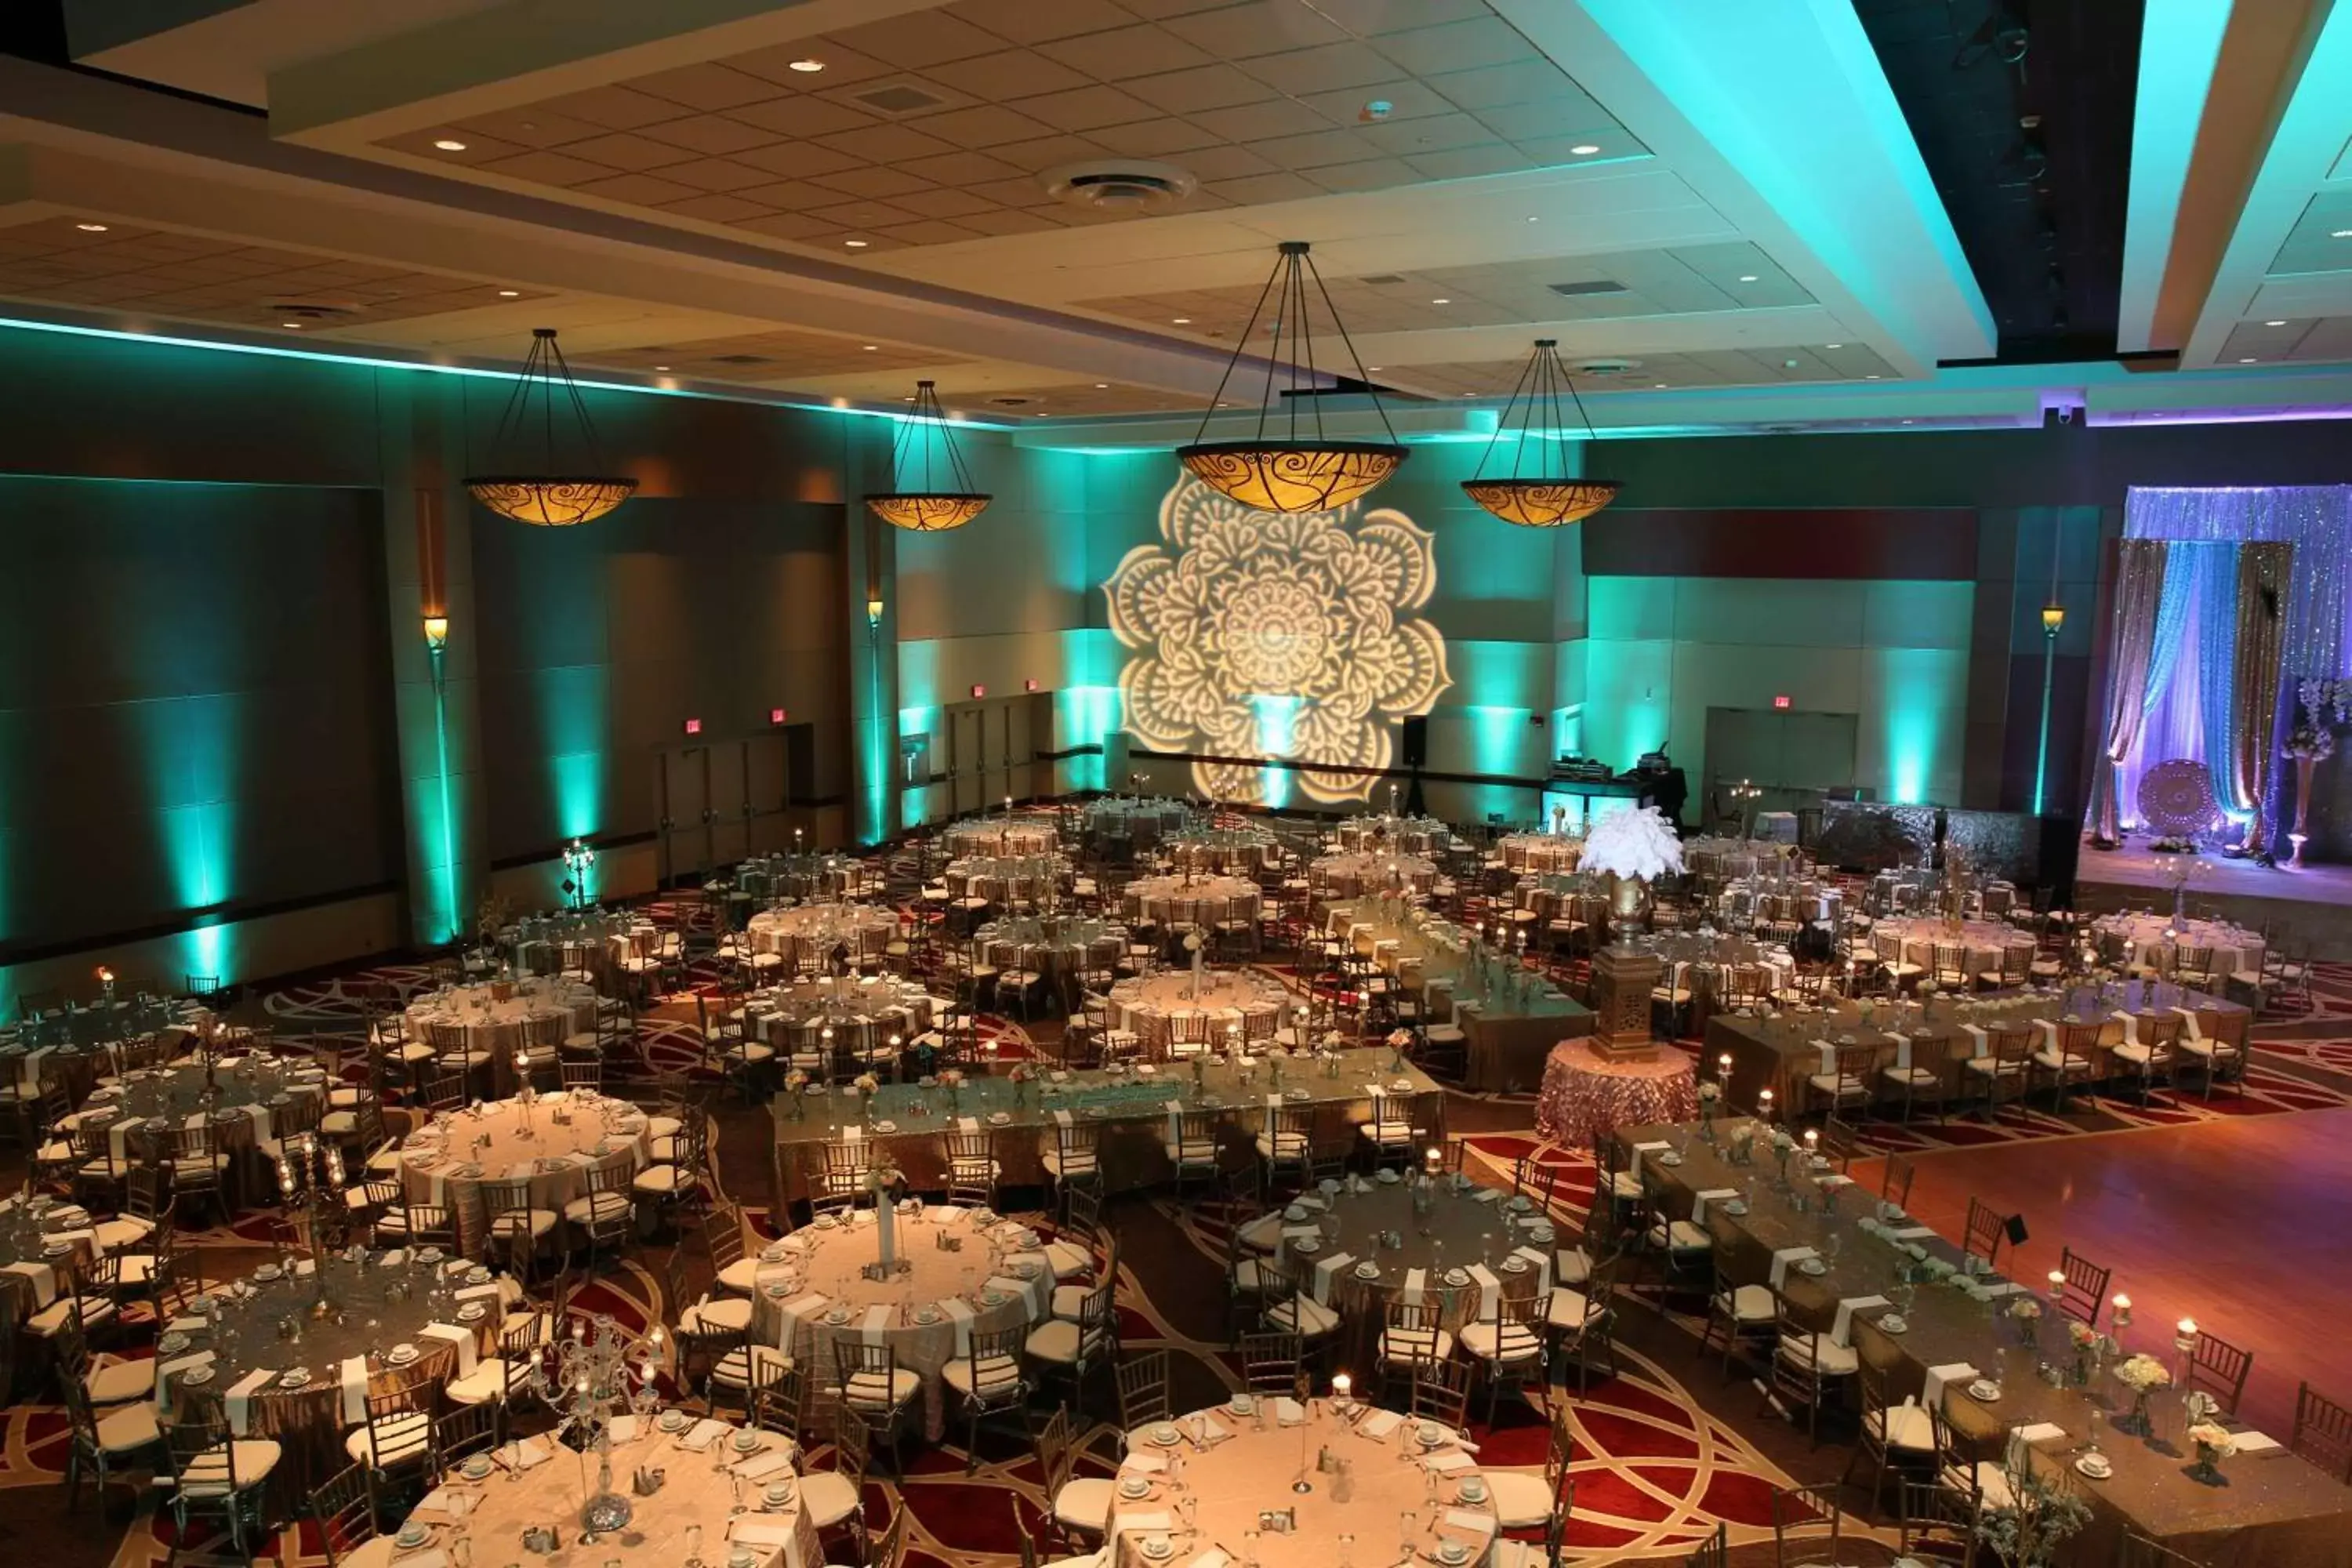 Banquet/Function facilities, Banquet Facilities in Hyatt Regency Columbus